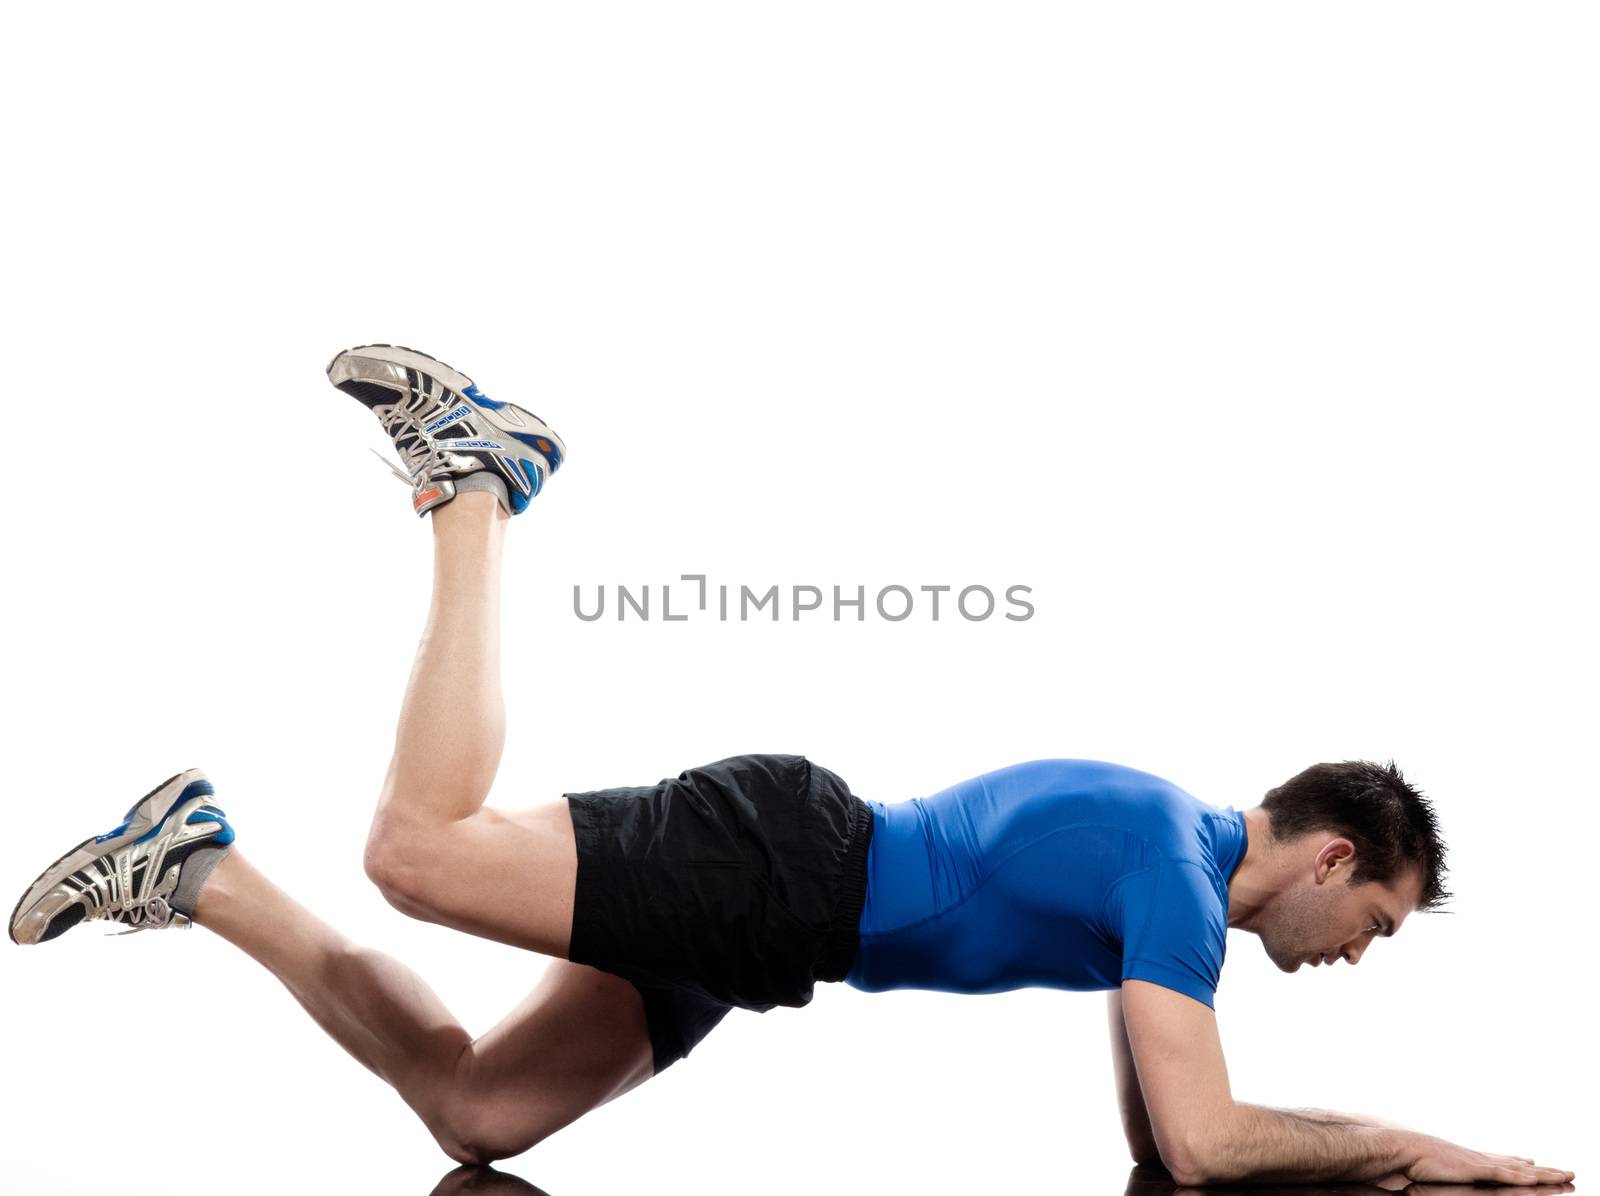 man on Abdominals workout posture on white background.
Plank
Bent Leg Raise